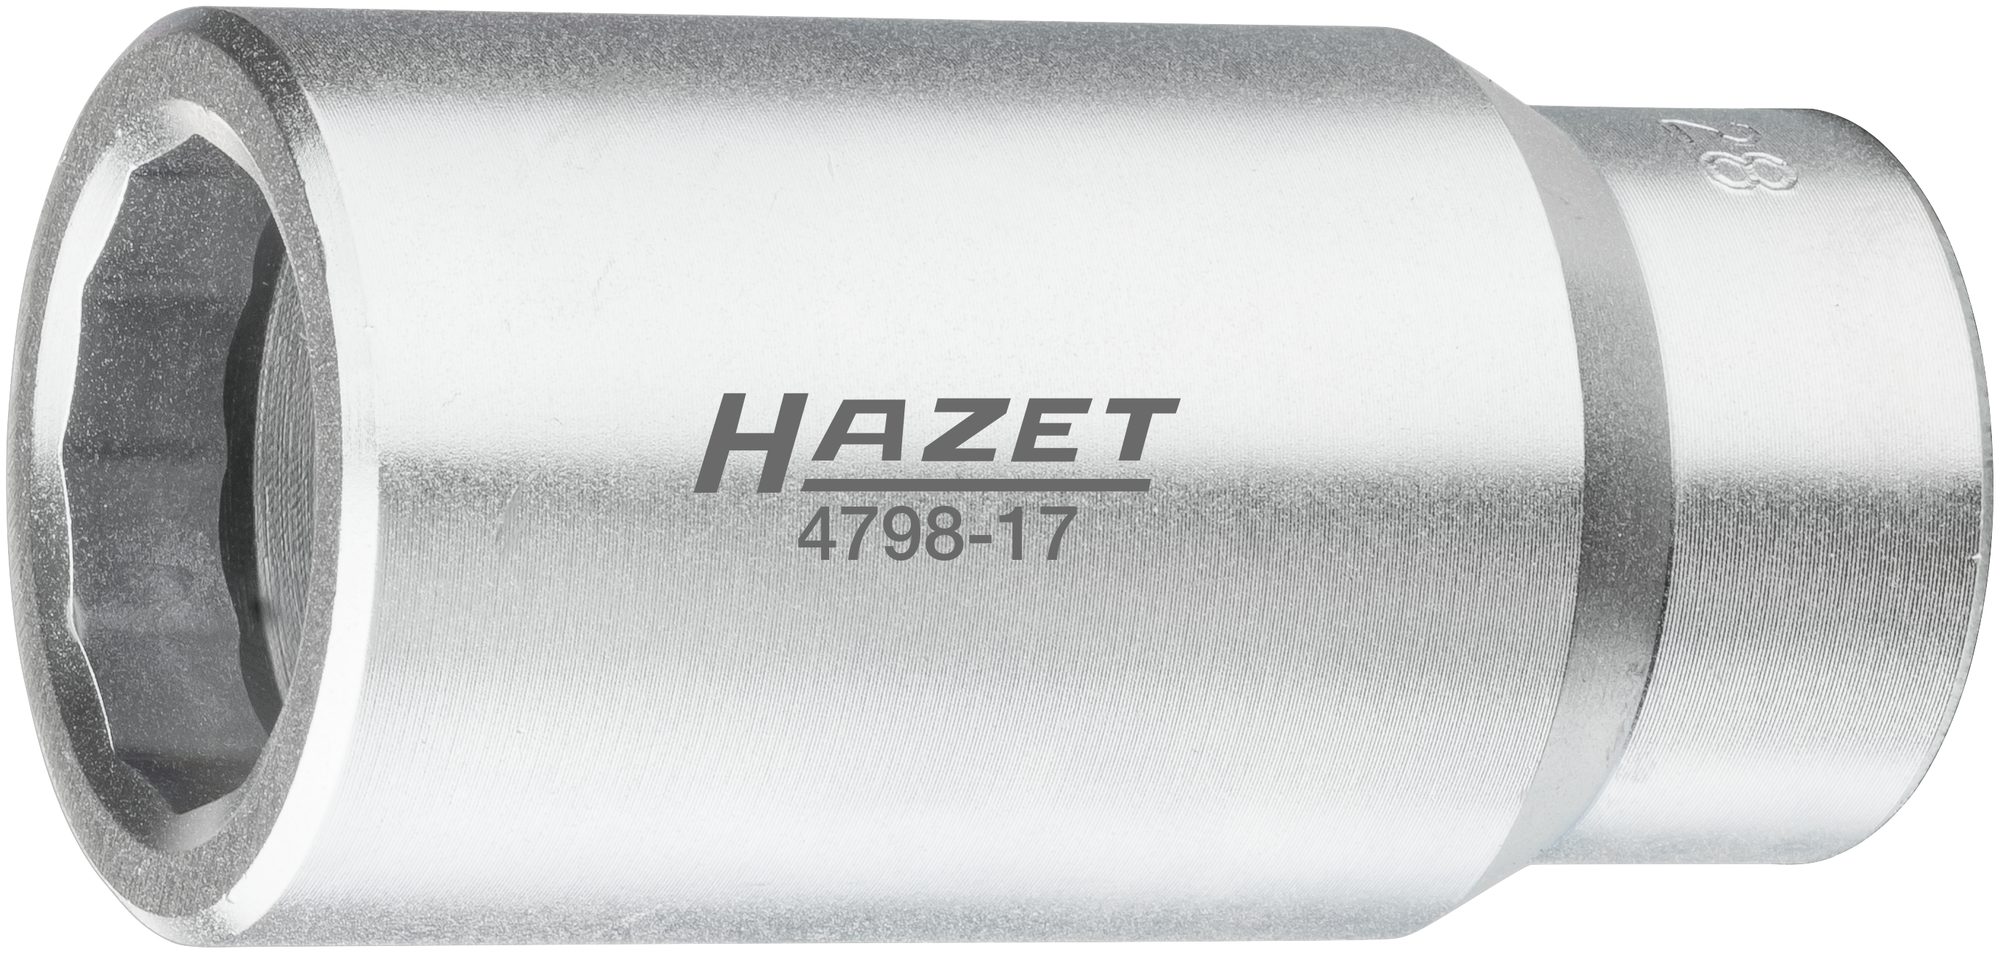 HAZET Injektor-Adapter-Satz Bosch /Renault/Siemens/ Denso Adapterplatte 4798 